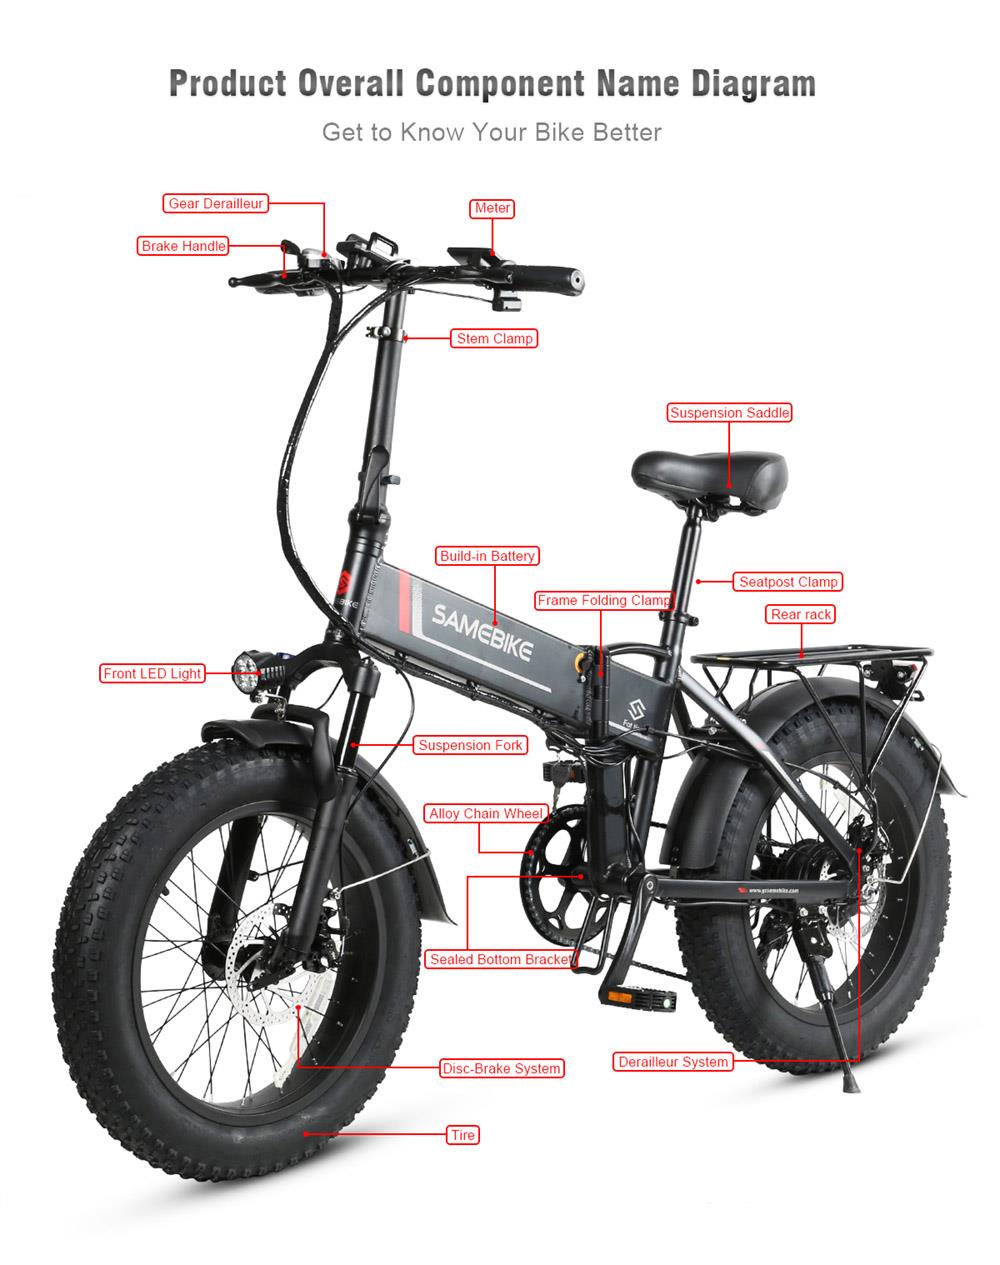 Samebike LOTDM200-FT Folding Electric Moped Bike 350W Motor 10Ah Battery Max 30km/h 20 Inch Tire - Black